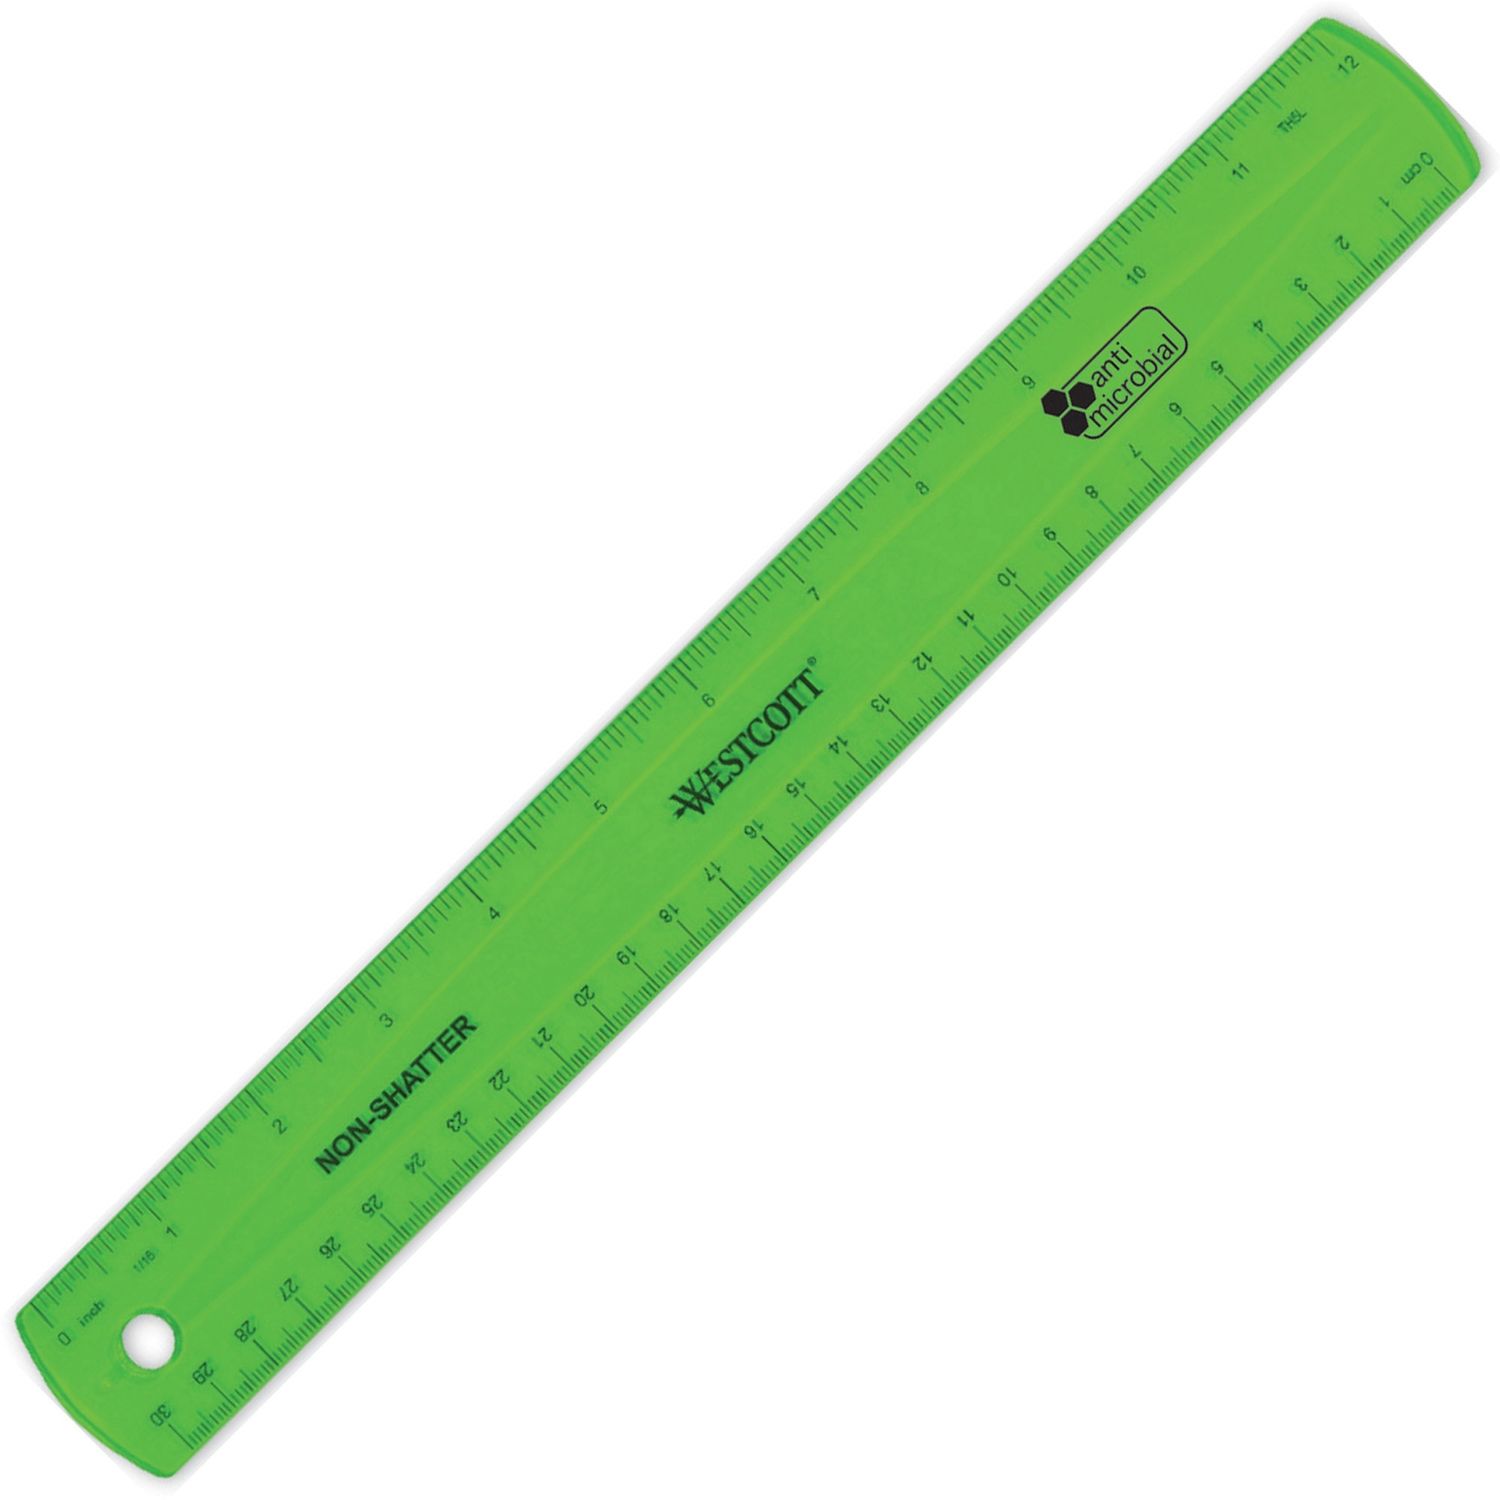 Acme Durable Plastic 6 Clear Ruler